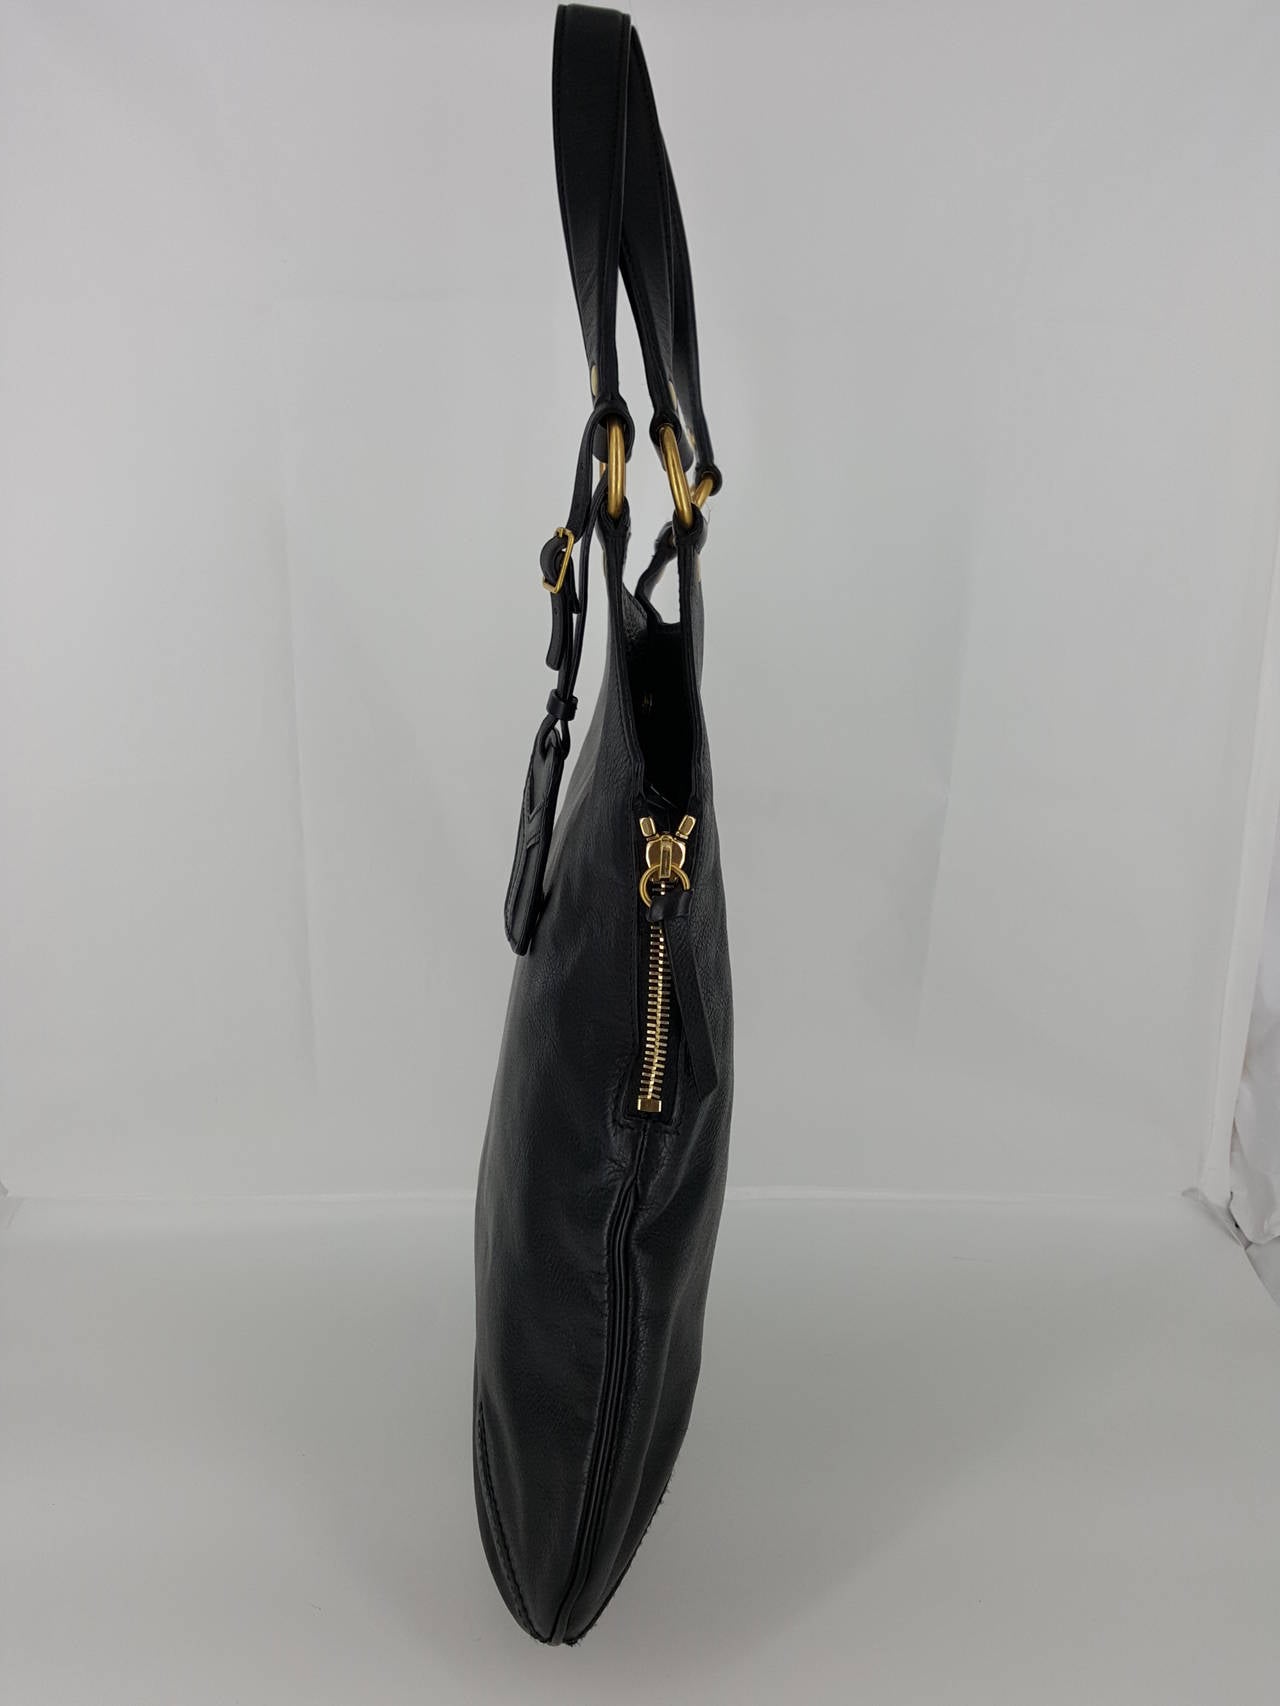 YSL Yves Saint Laurent Black Leather Tribute Bag. For Sale at 1stdibs  